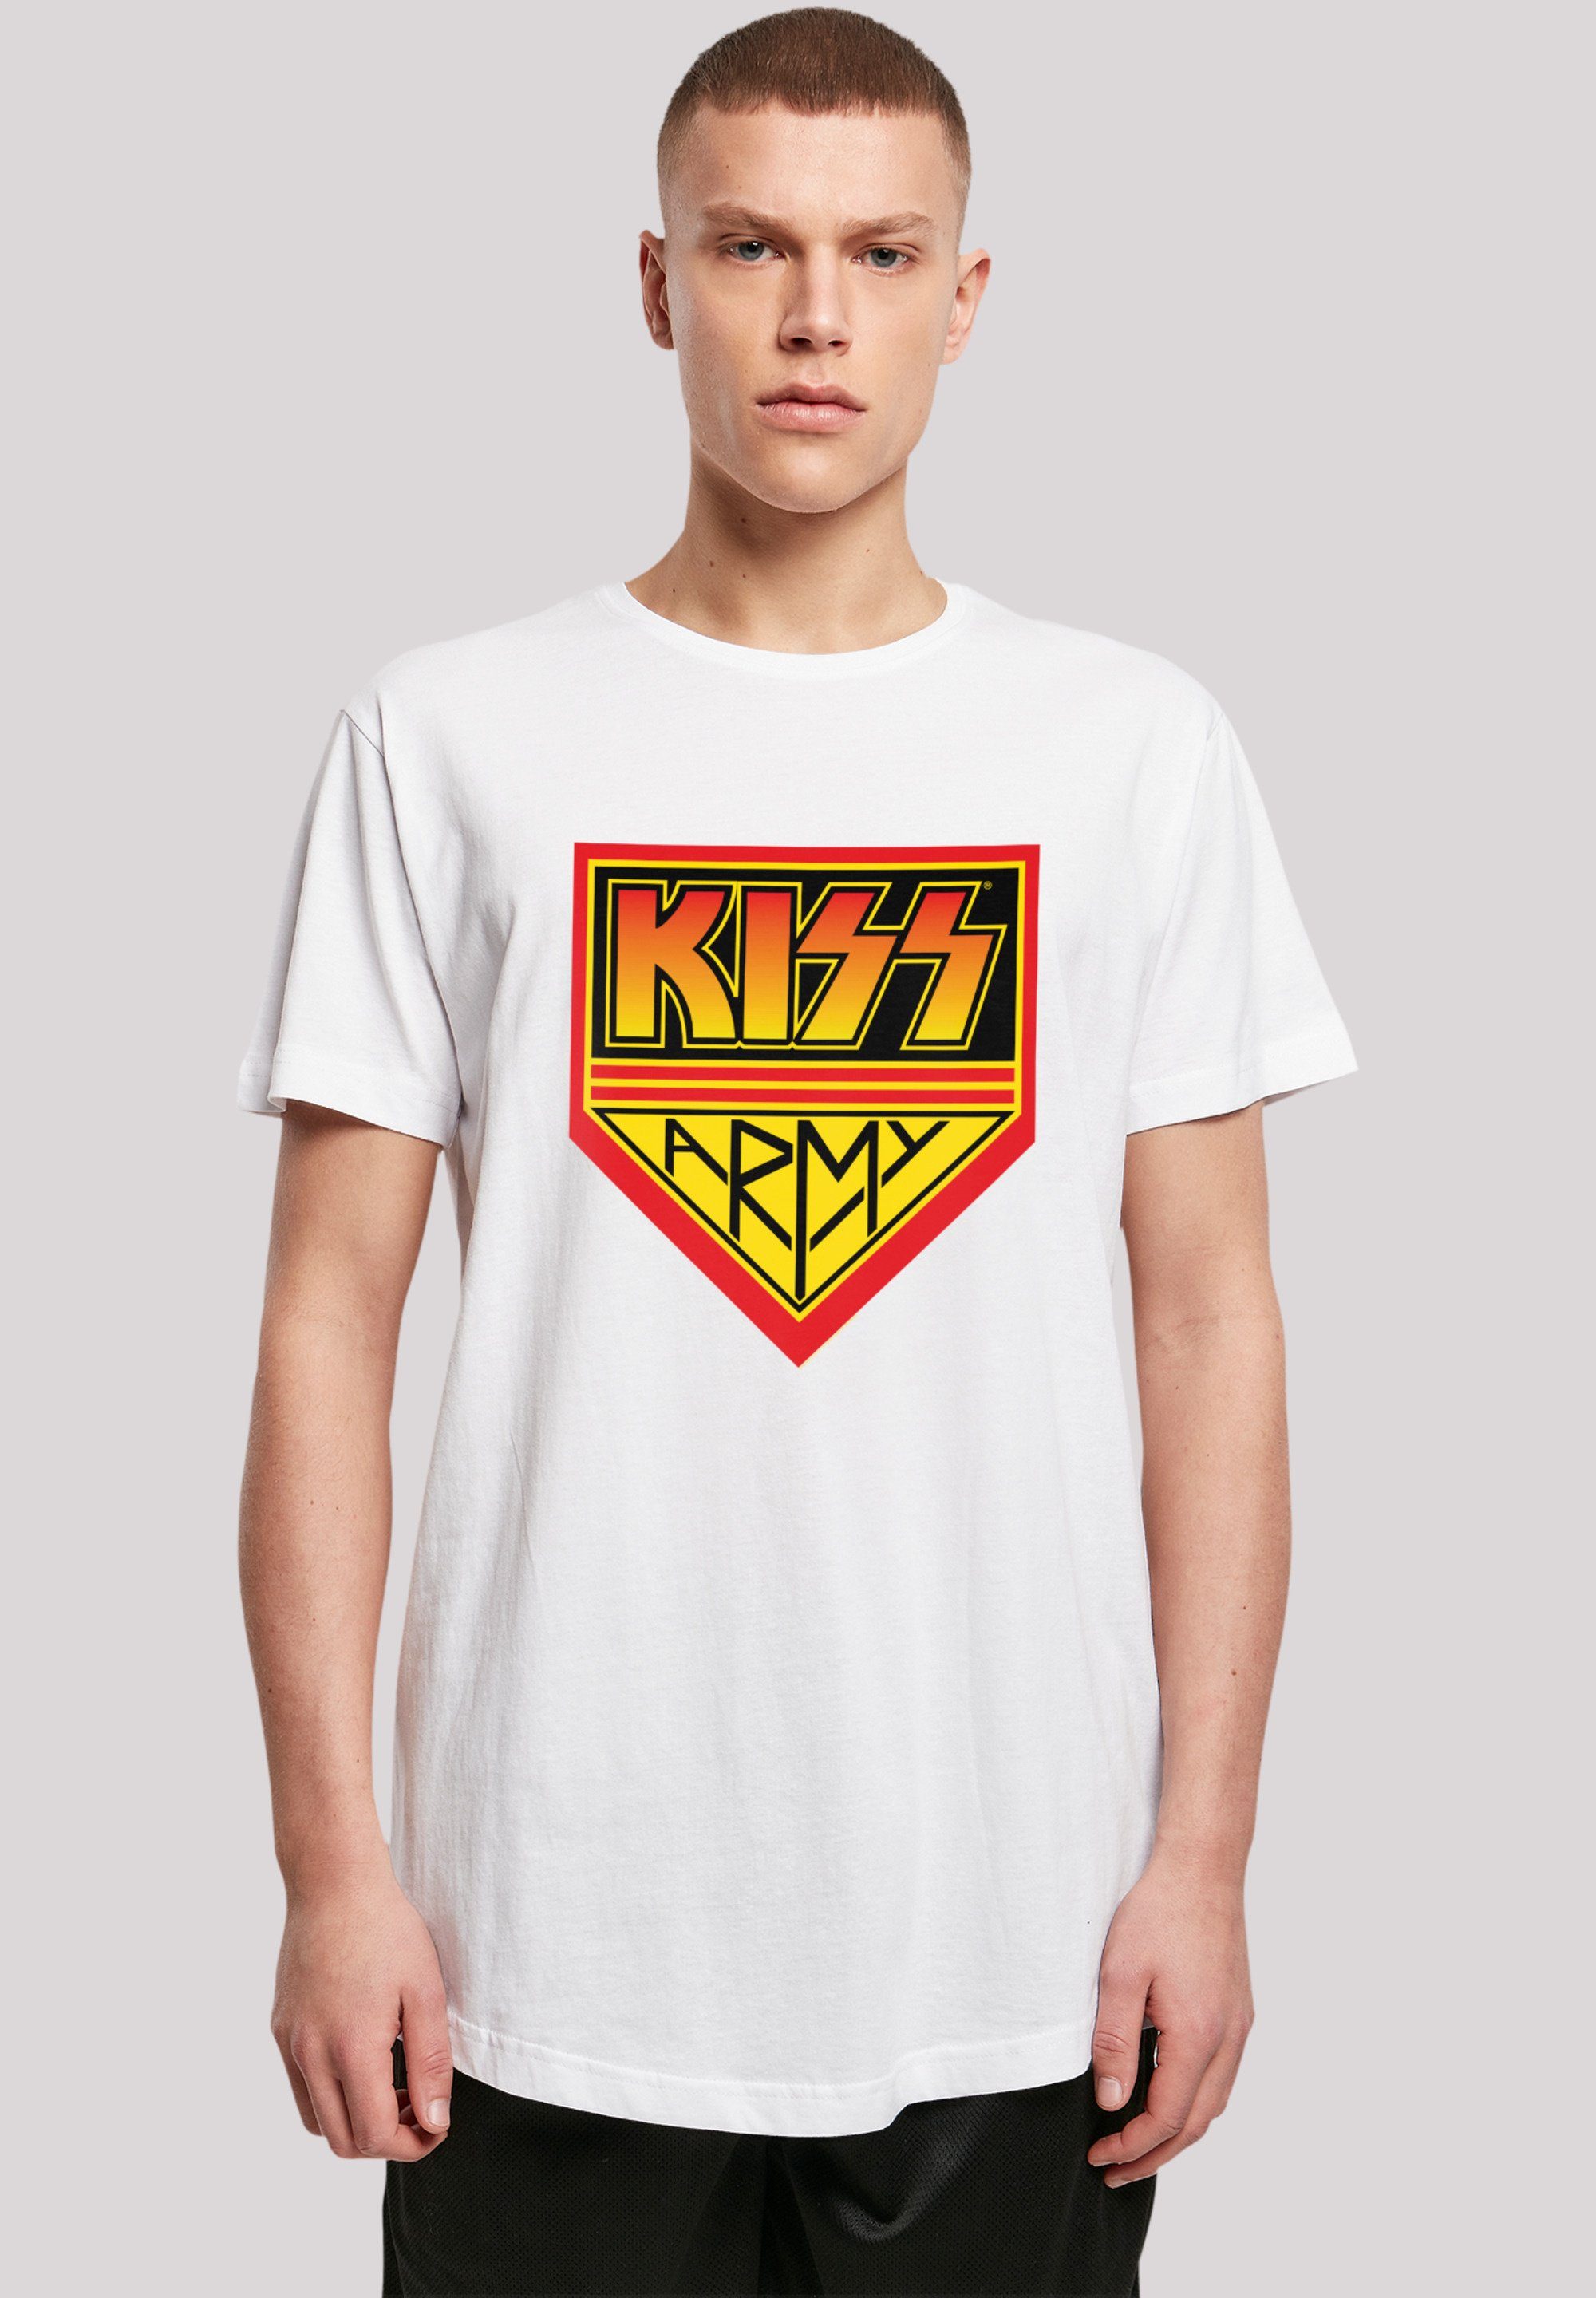 Logo Premium By T-Shirt Kiss Army weiß Qualität, Off Musik, Rock Band Rock F4NT4STIC